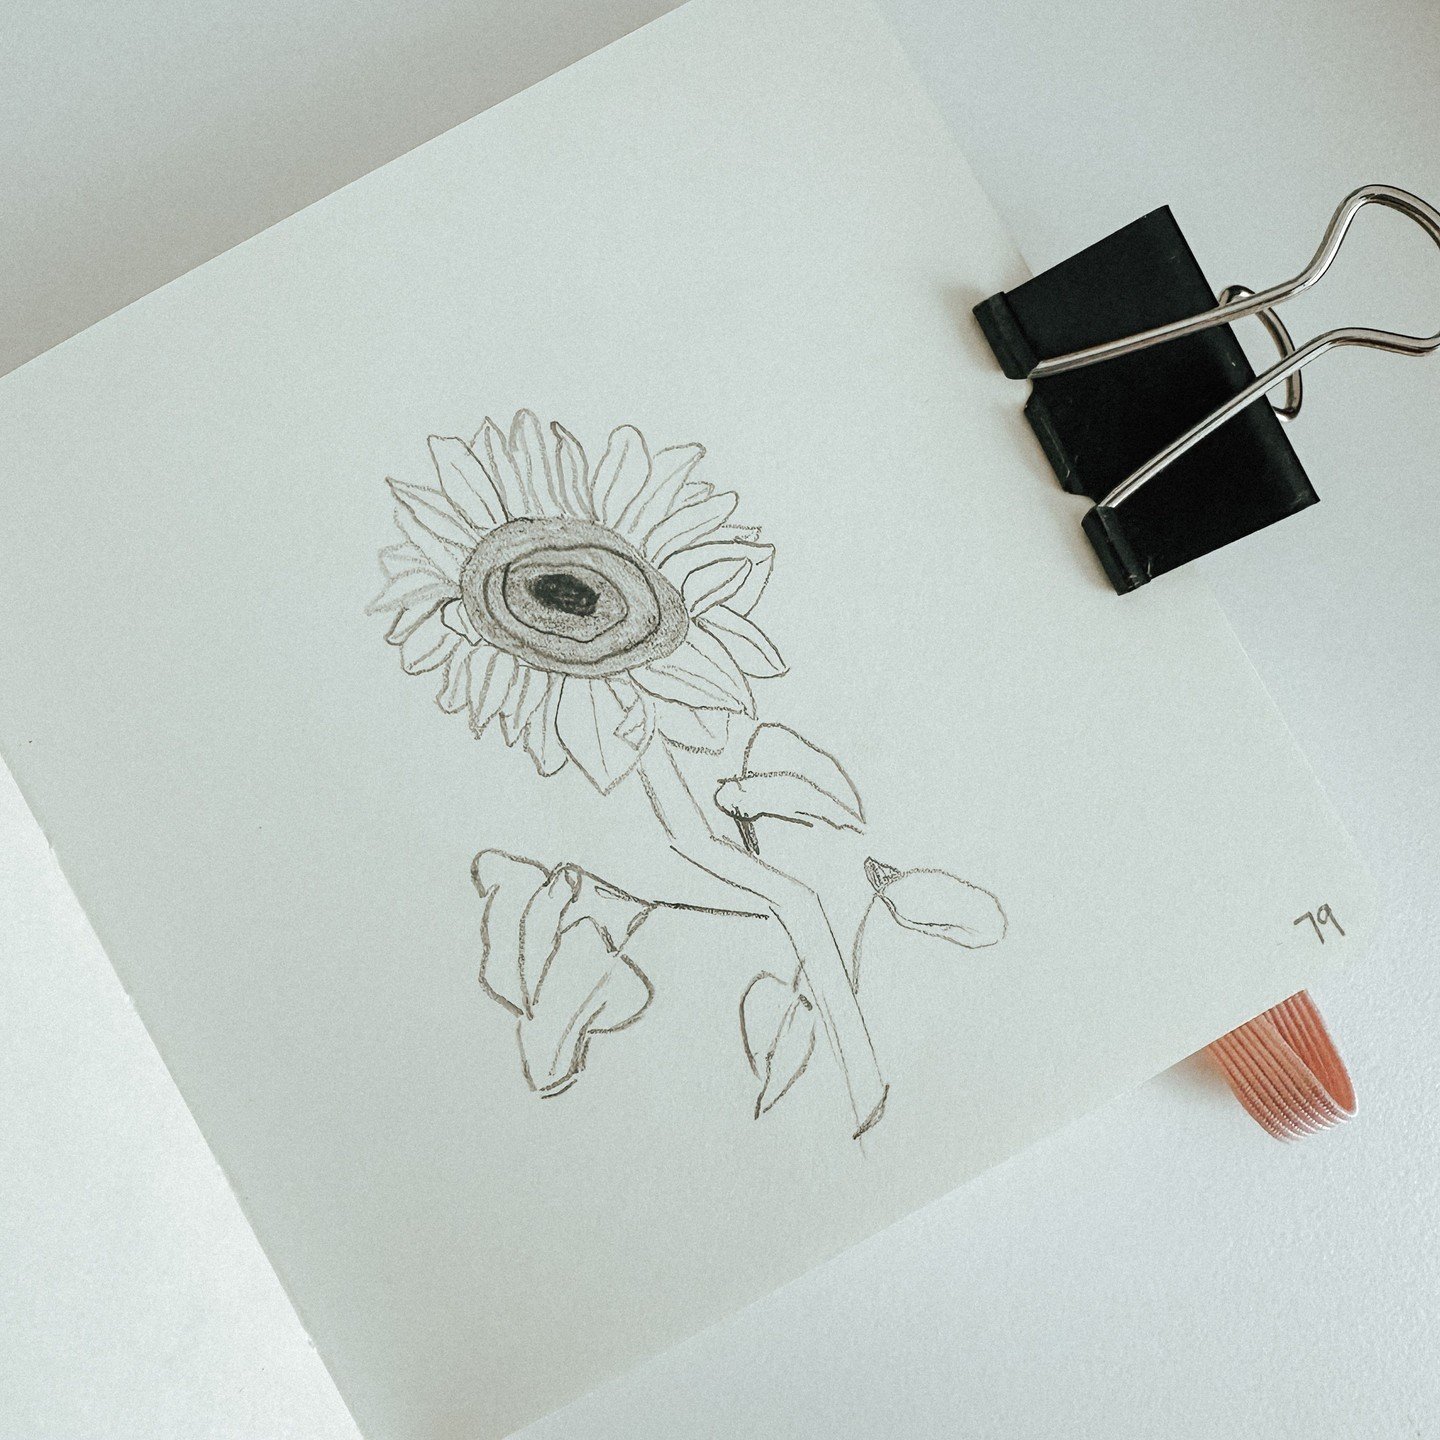 79: Sunflower
100 plant sketches
#sketchbook #sketchbookart #plantdrawing